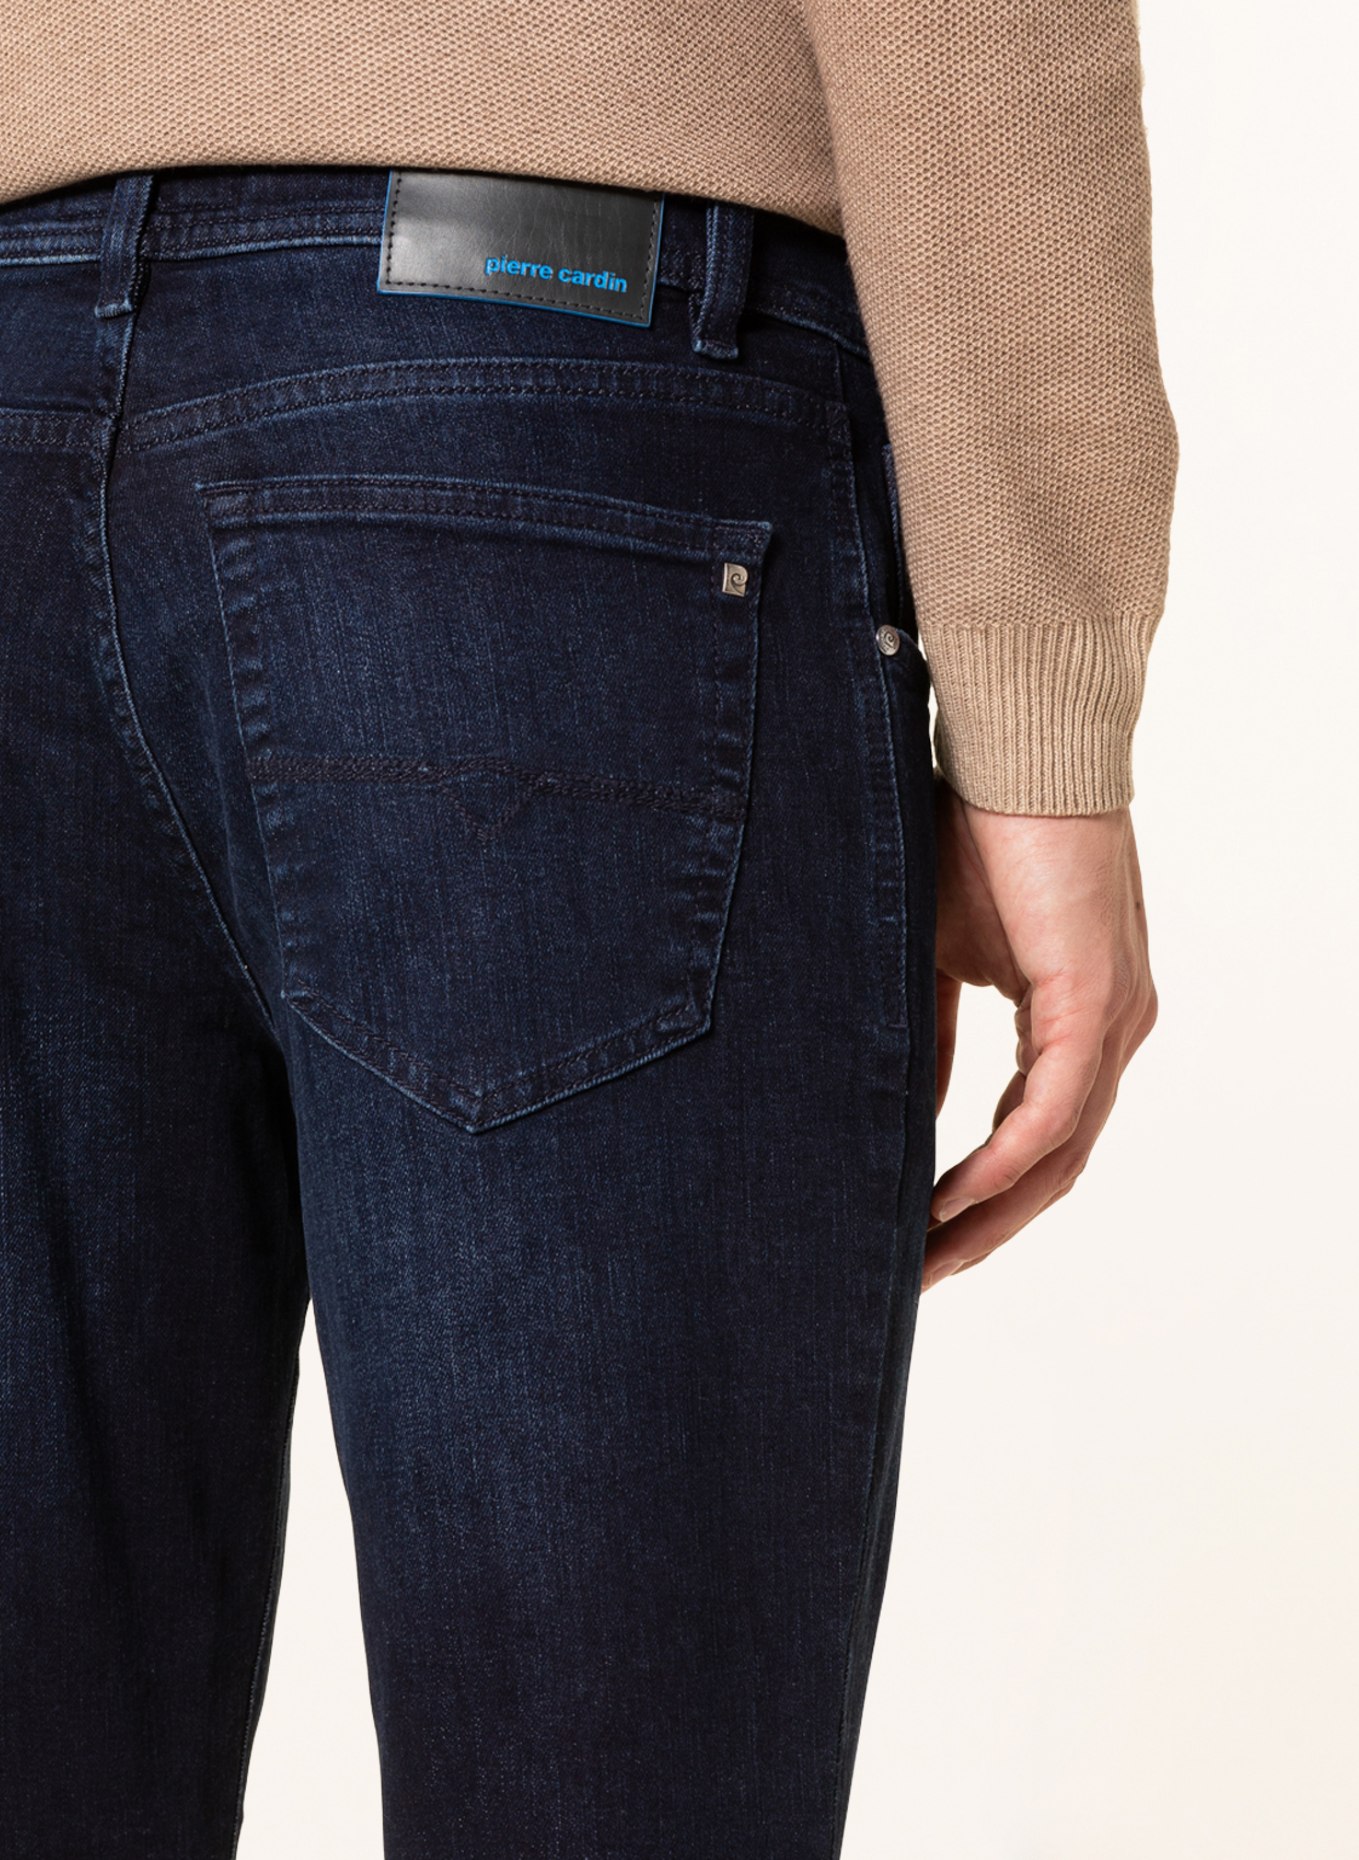 pierre cardin Jeans DIJON Comfort Fit , Farbe: 6814 dark blue used buffies (Bild 5)